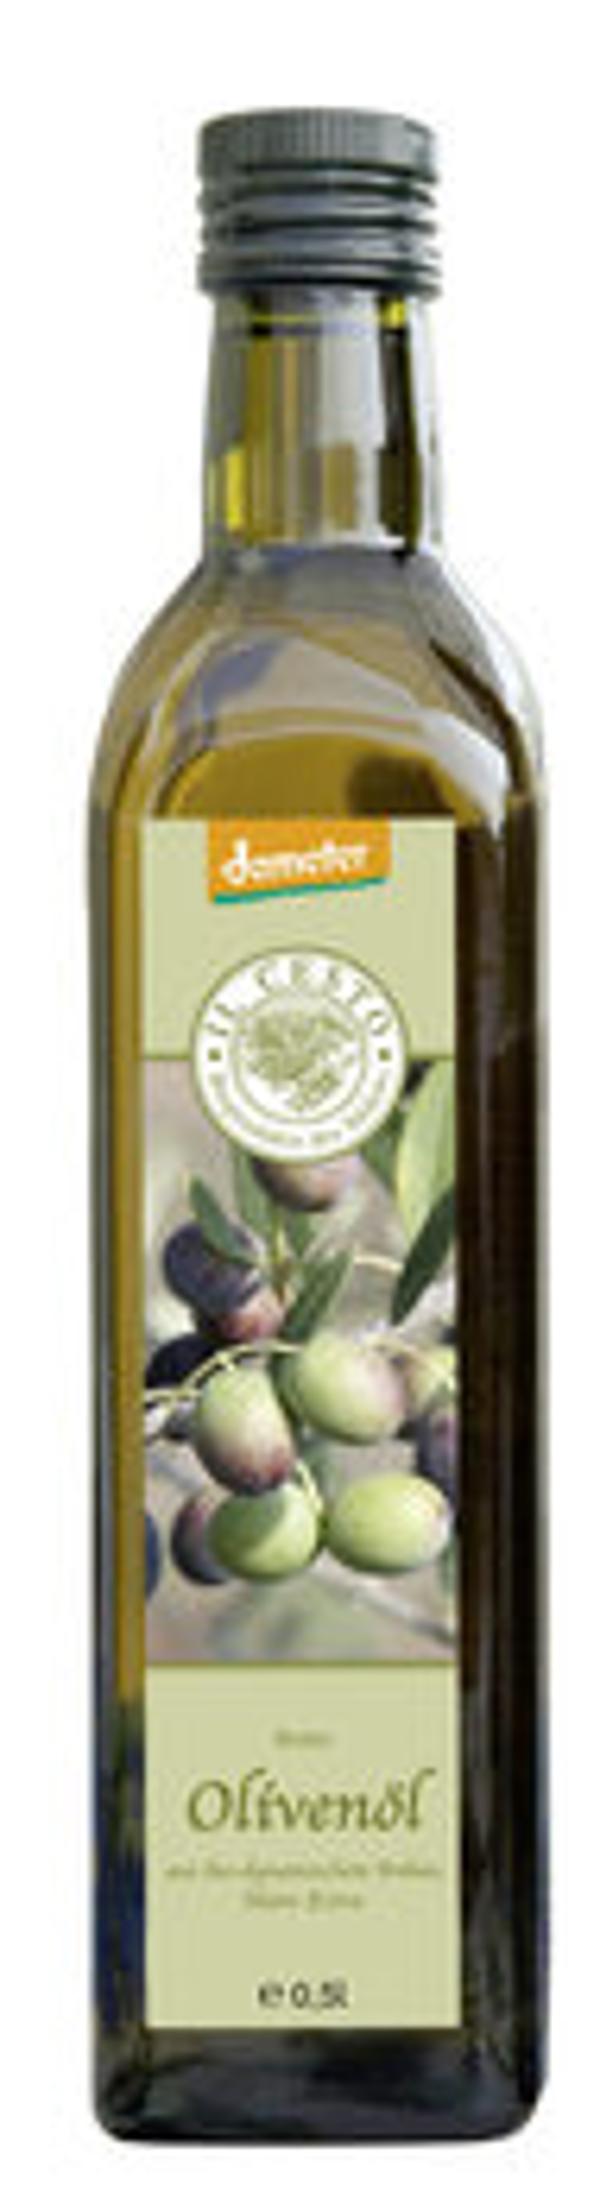 Produktfoto zu Olivenöl Nativ Extra 500ml